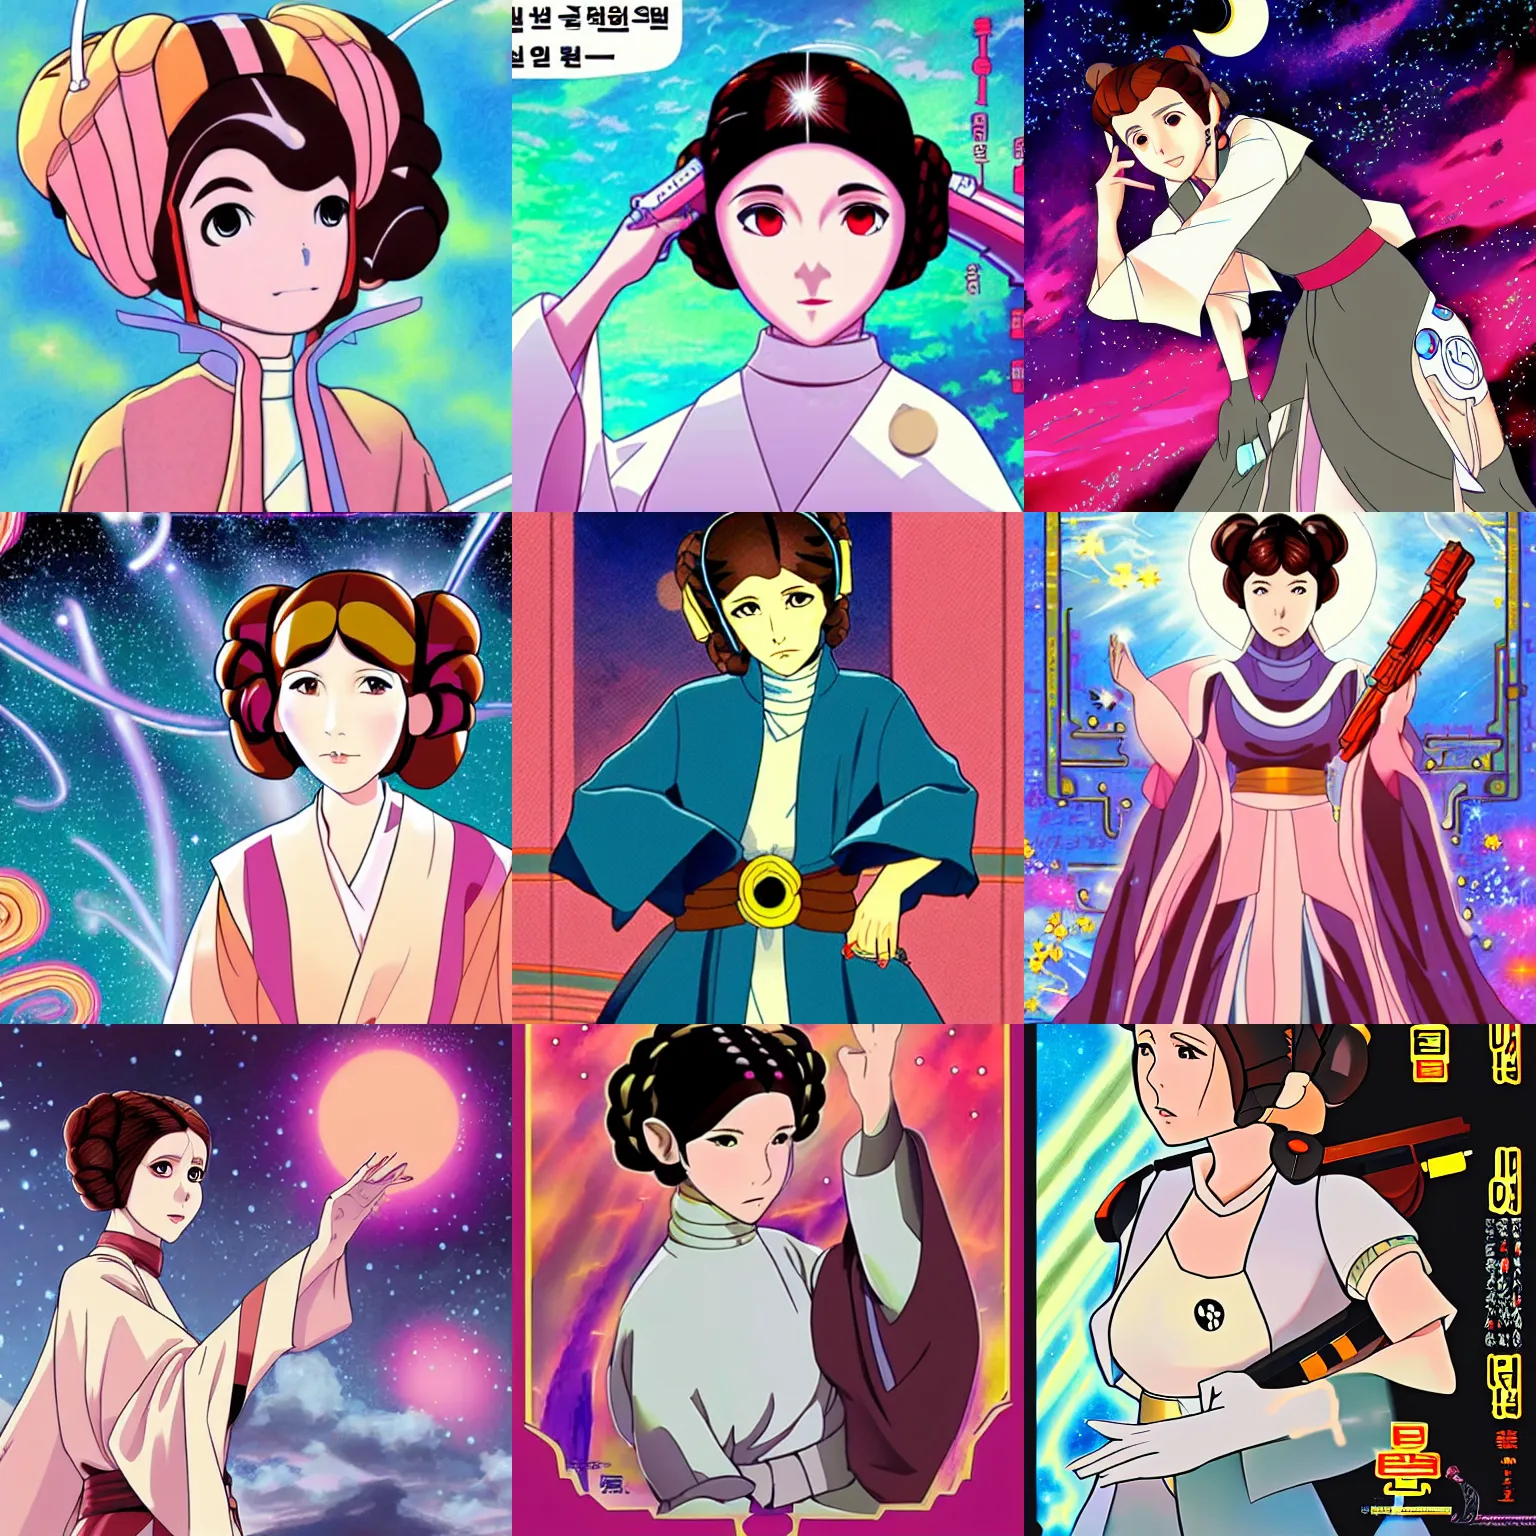 Prompt: princess leia, korean colorful anime art